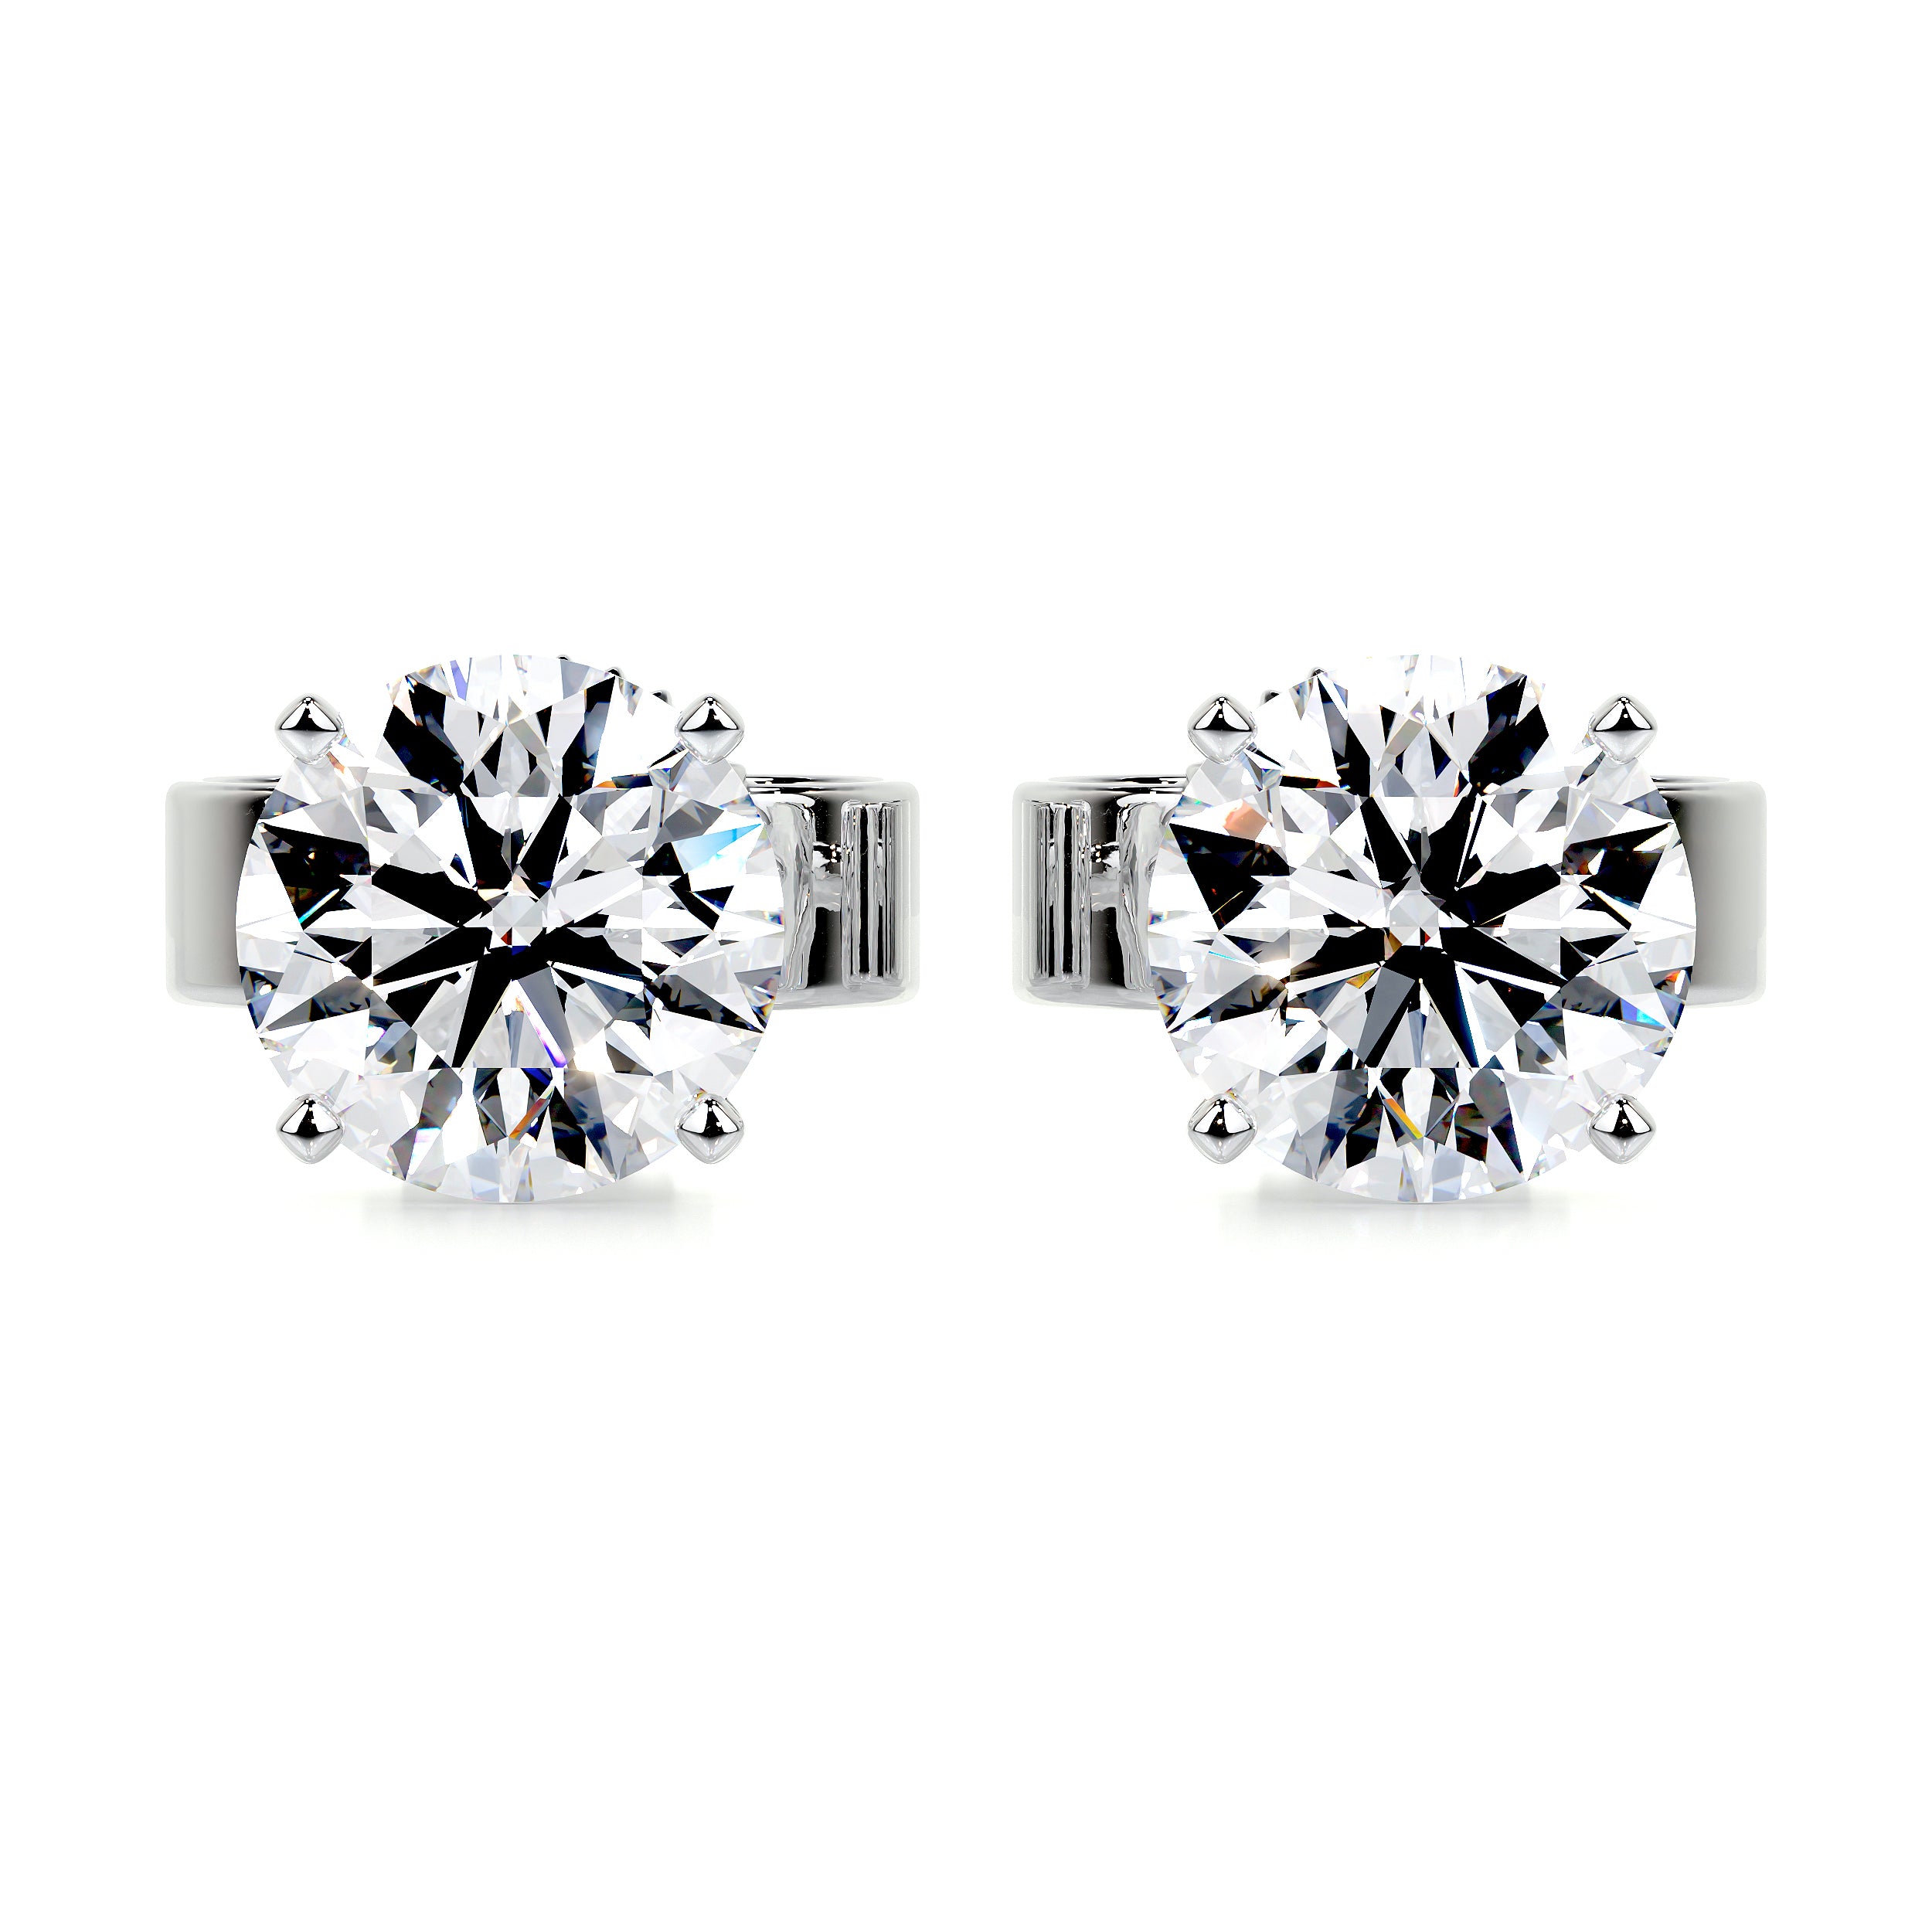 Allen Diamond Earrings   (5 Carat) -18K White Gold